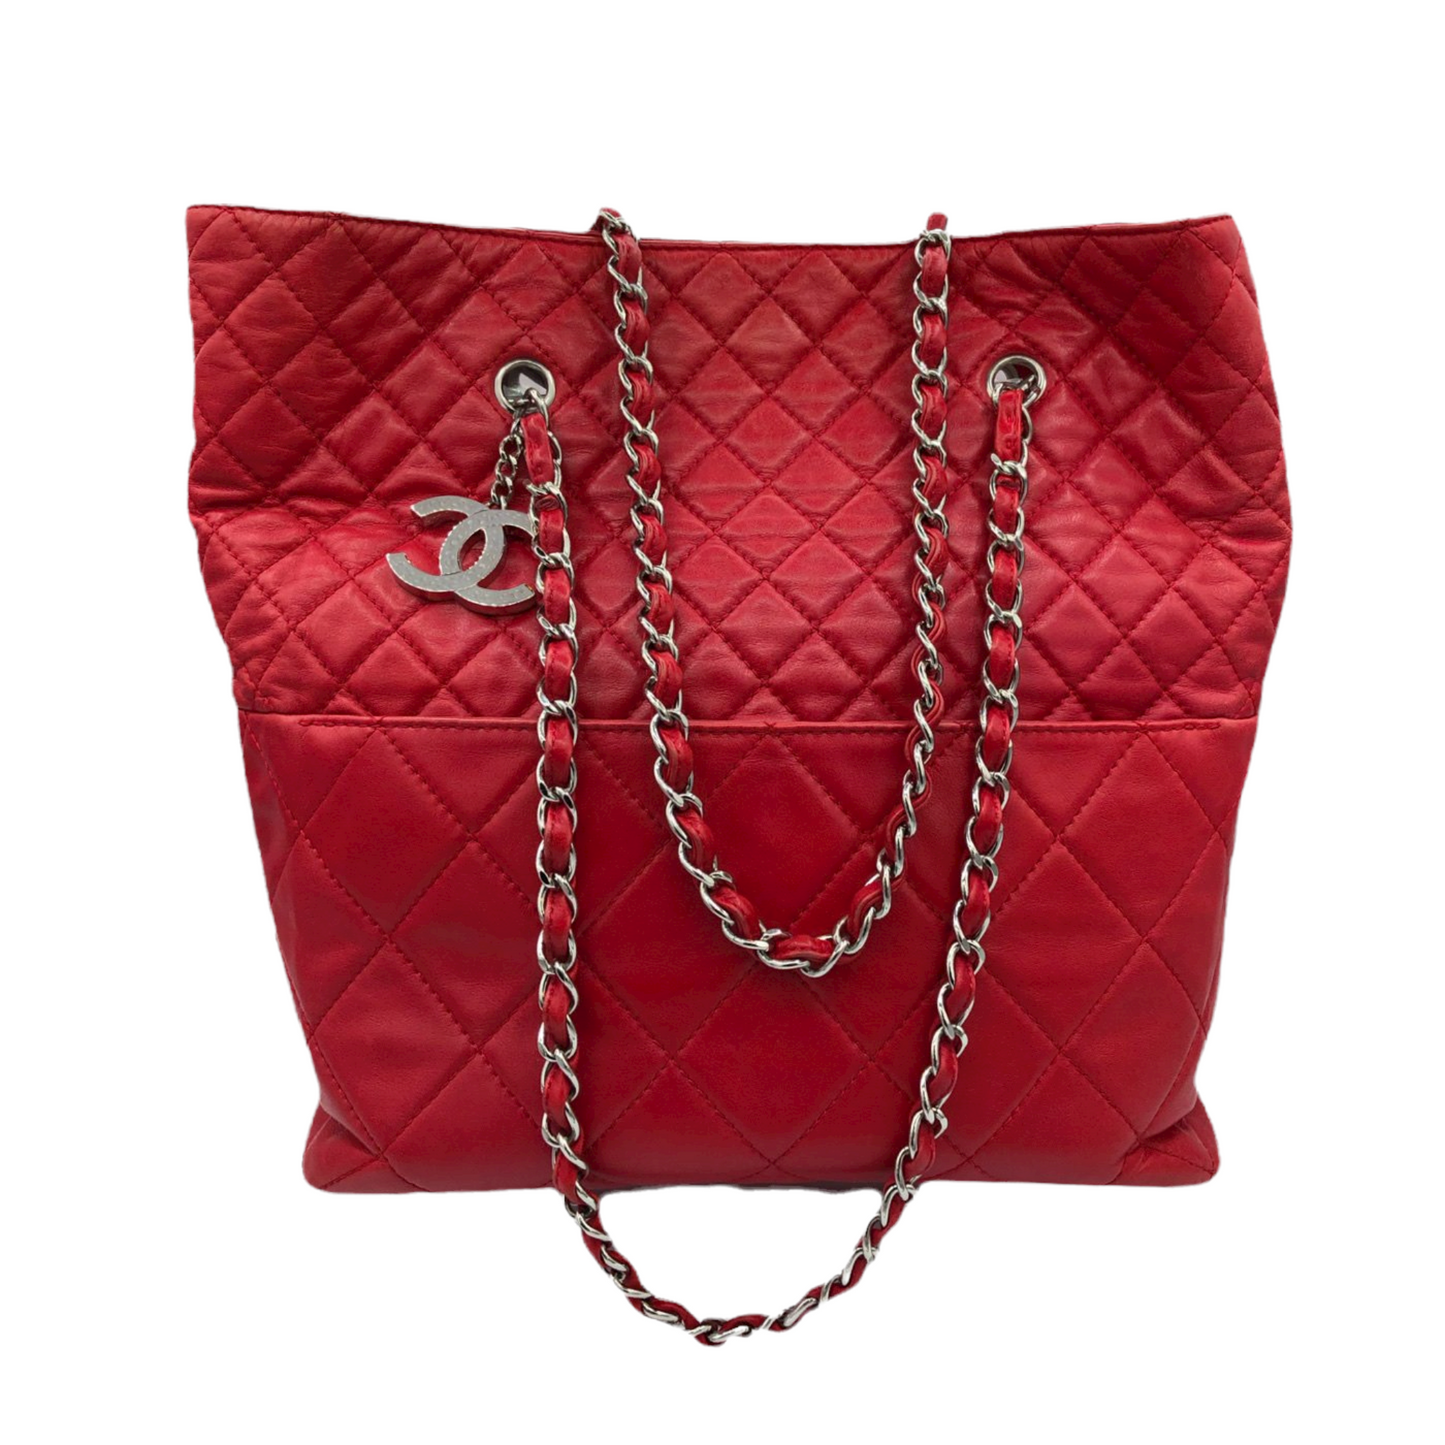 Chanel tote bag - 1990s